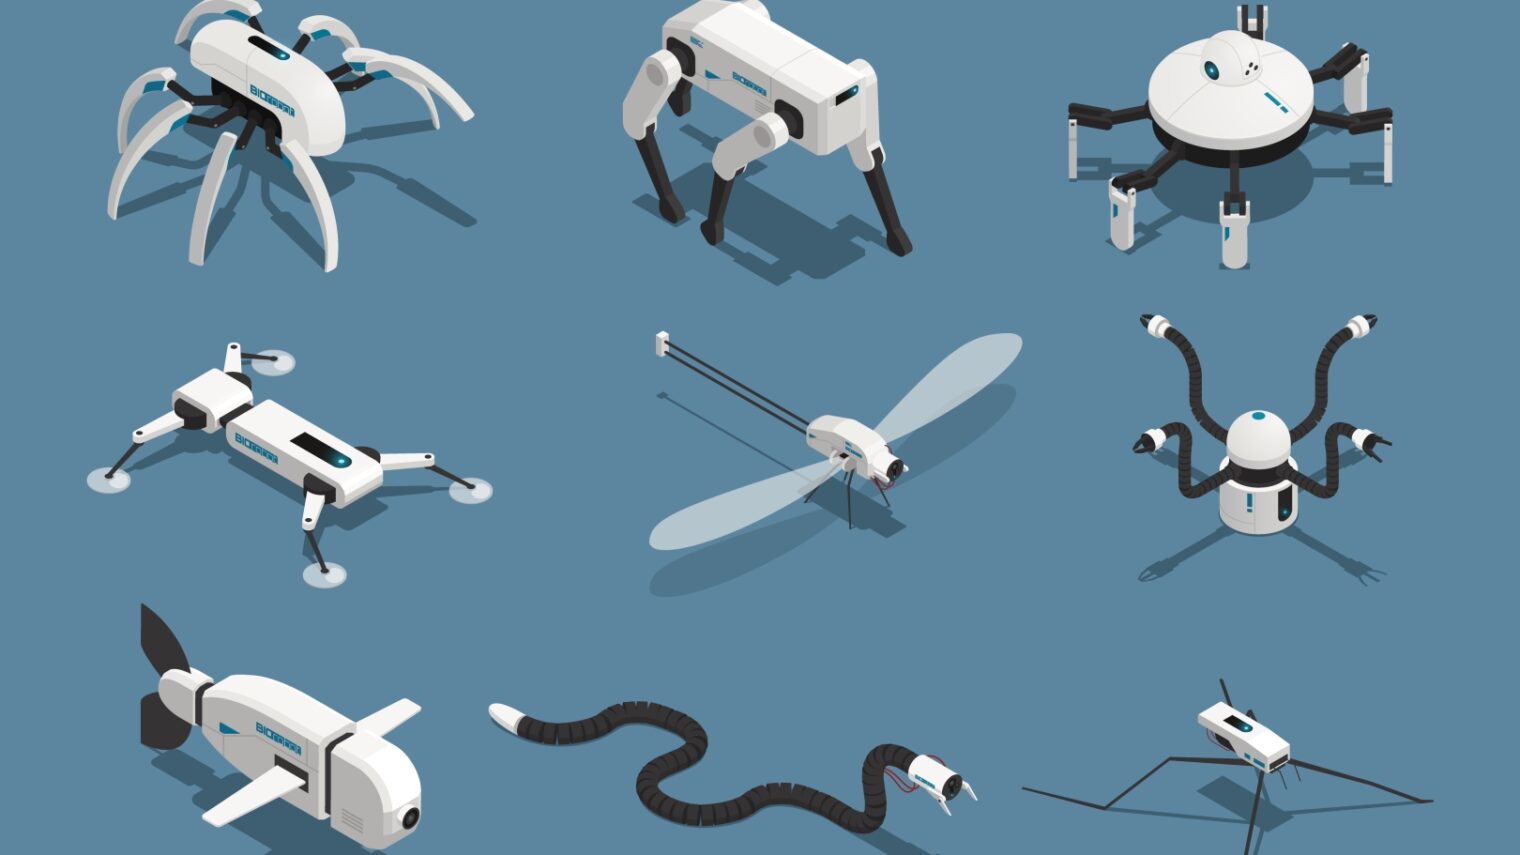 Illustration of animal-shaped robots by Macrovector via Shutterstock.com